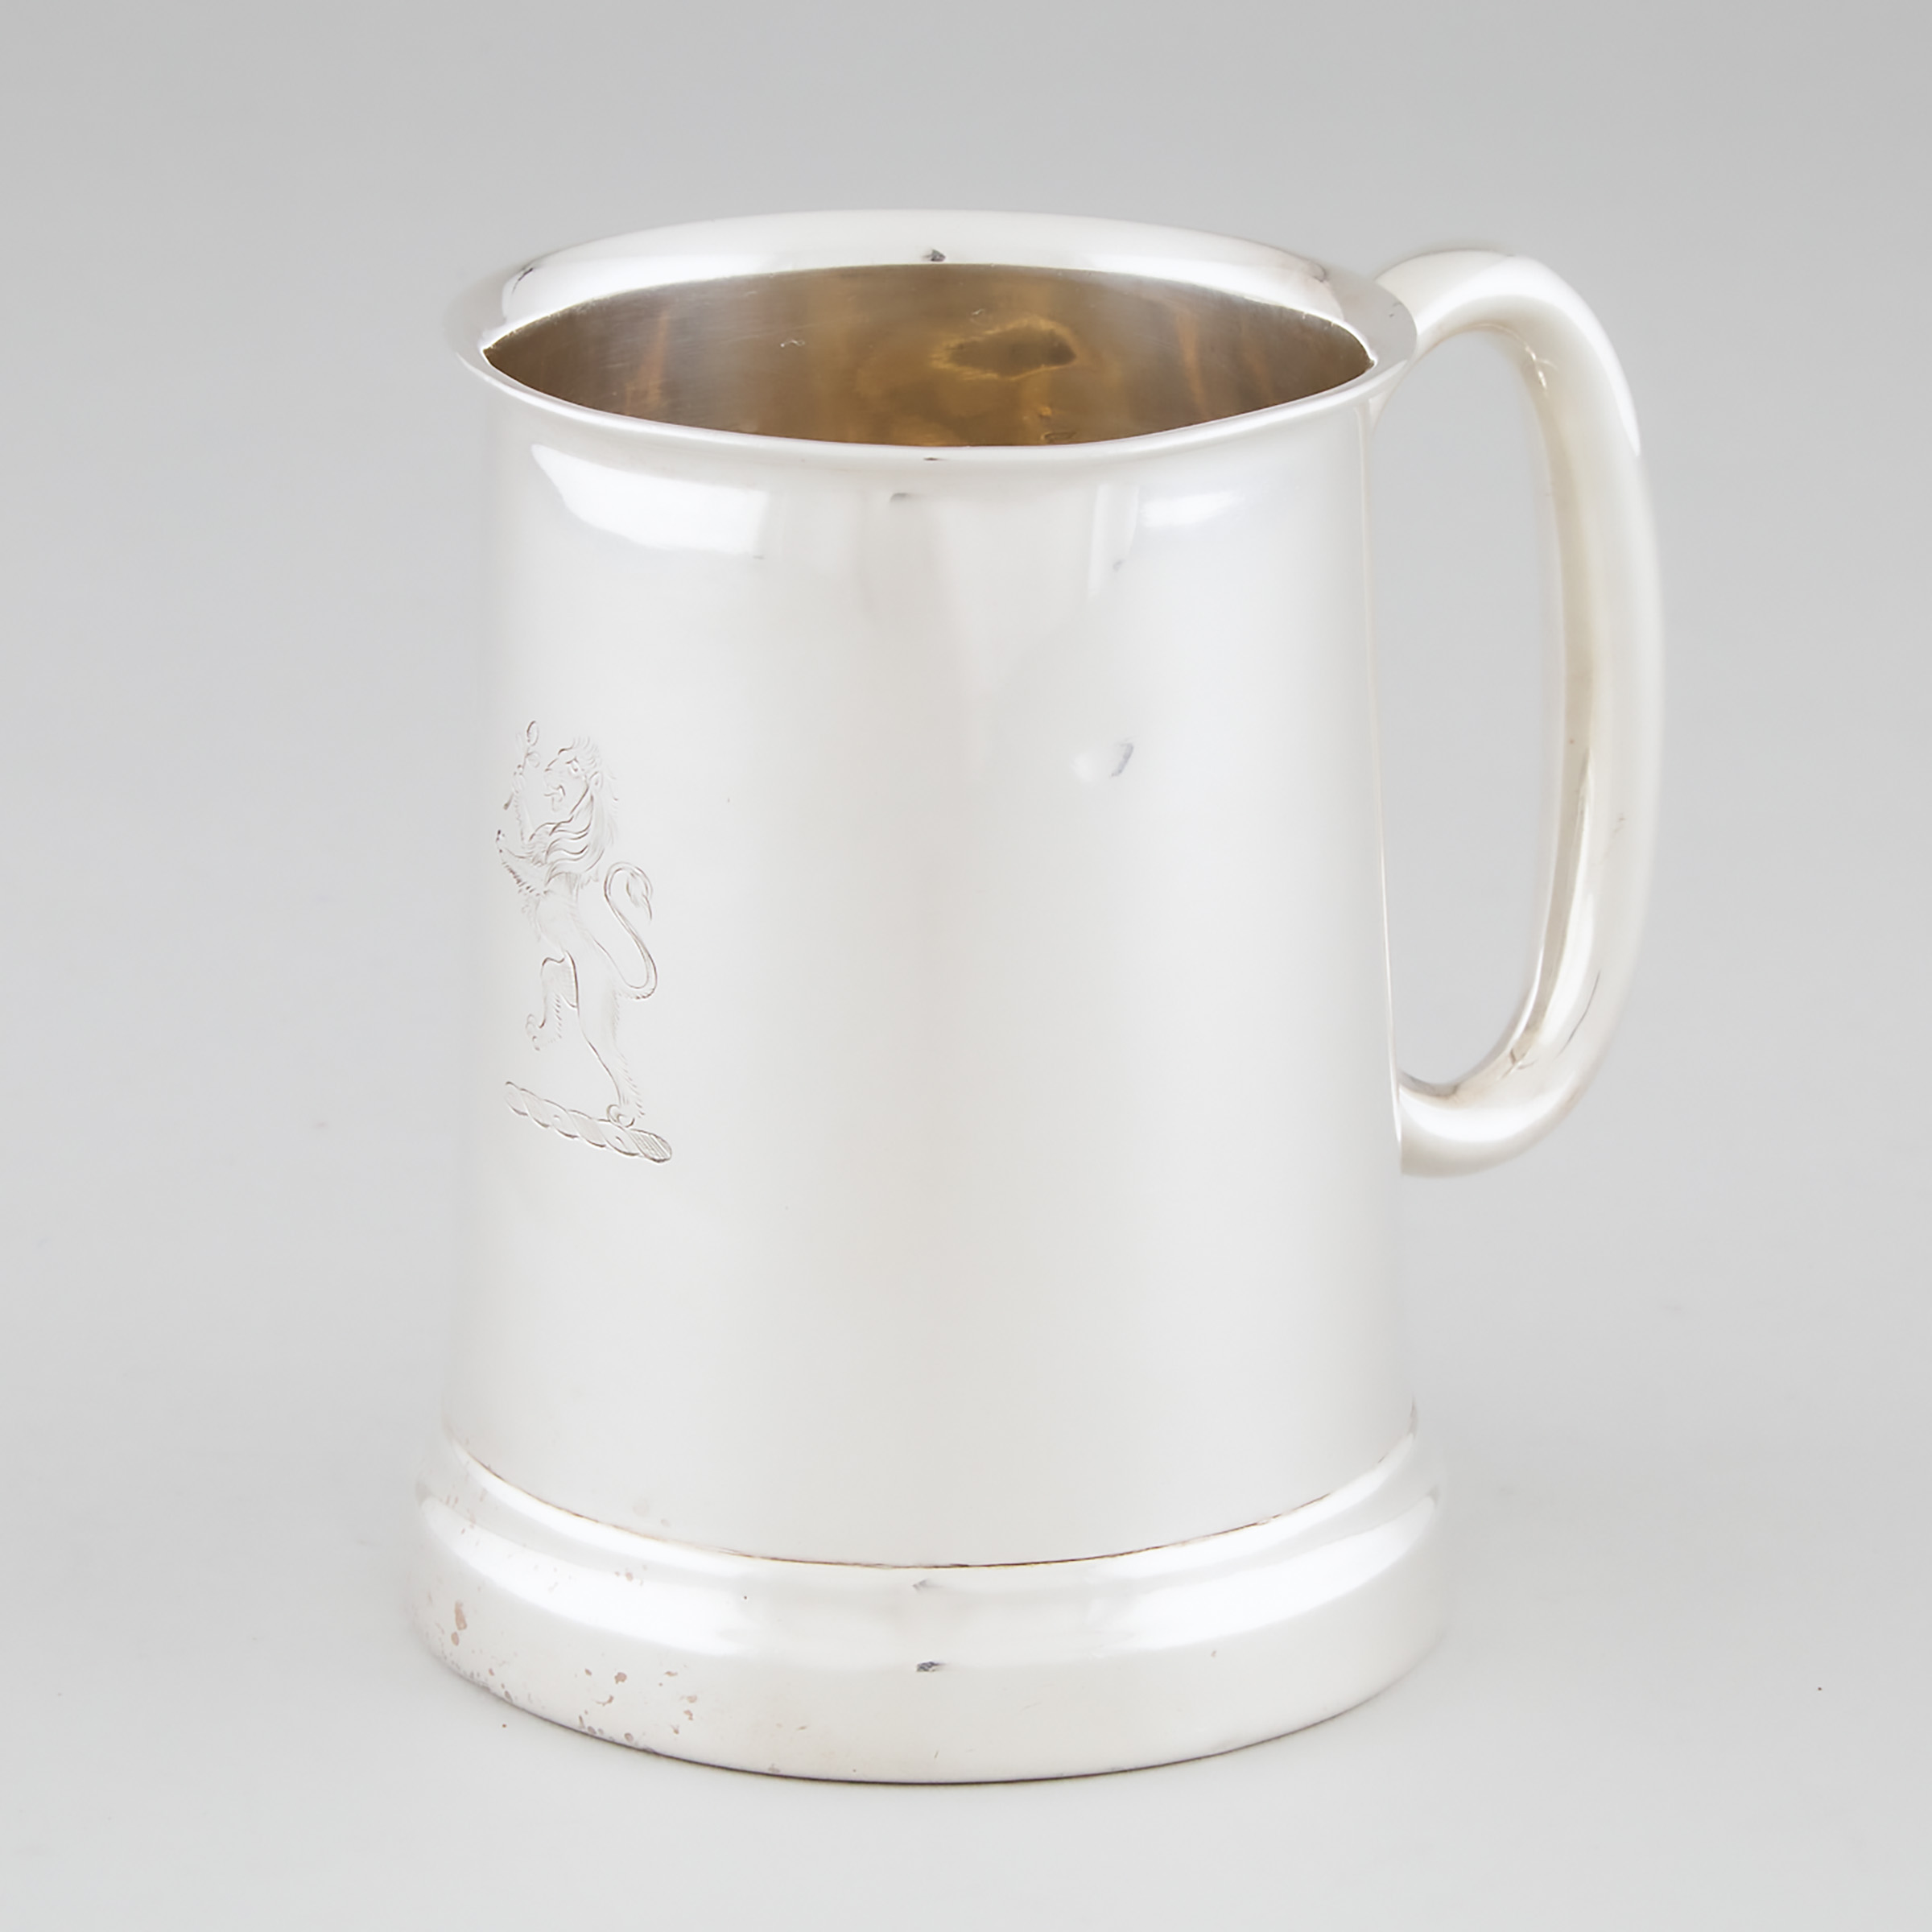 English Silver Glass-Bottomed Pint Mug, Sydney Hall & Co. (probably), Sheffield, 1932